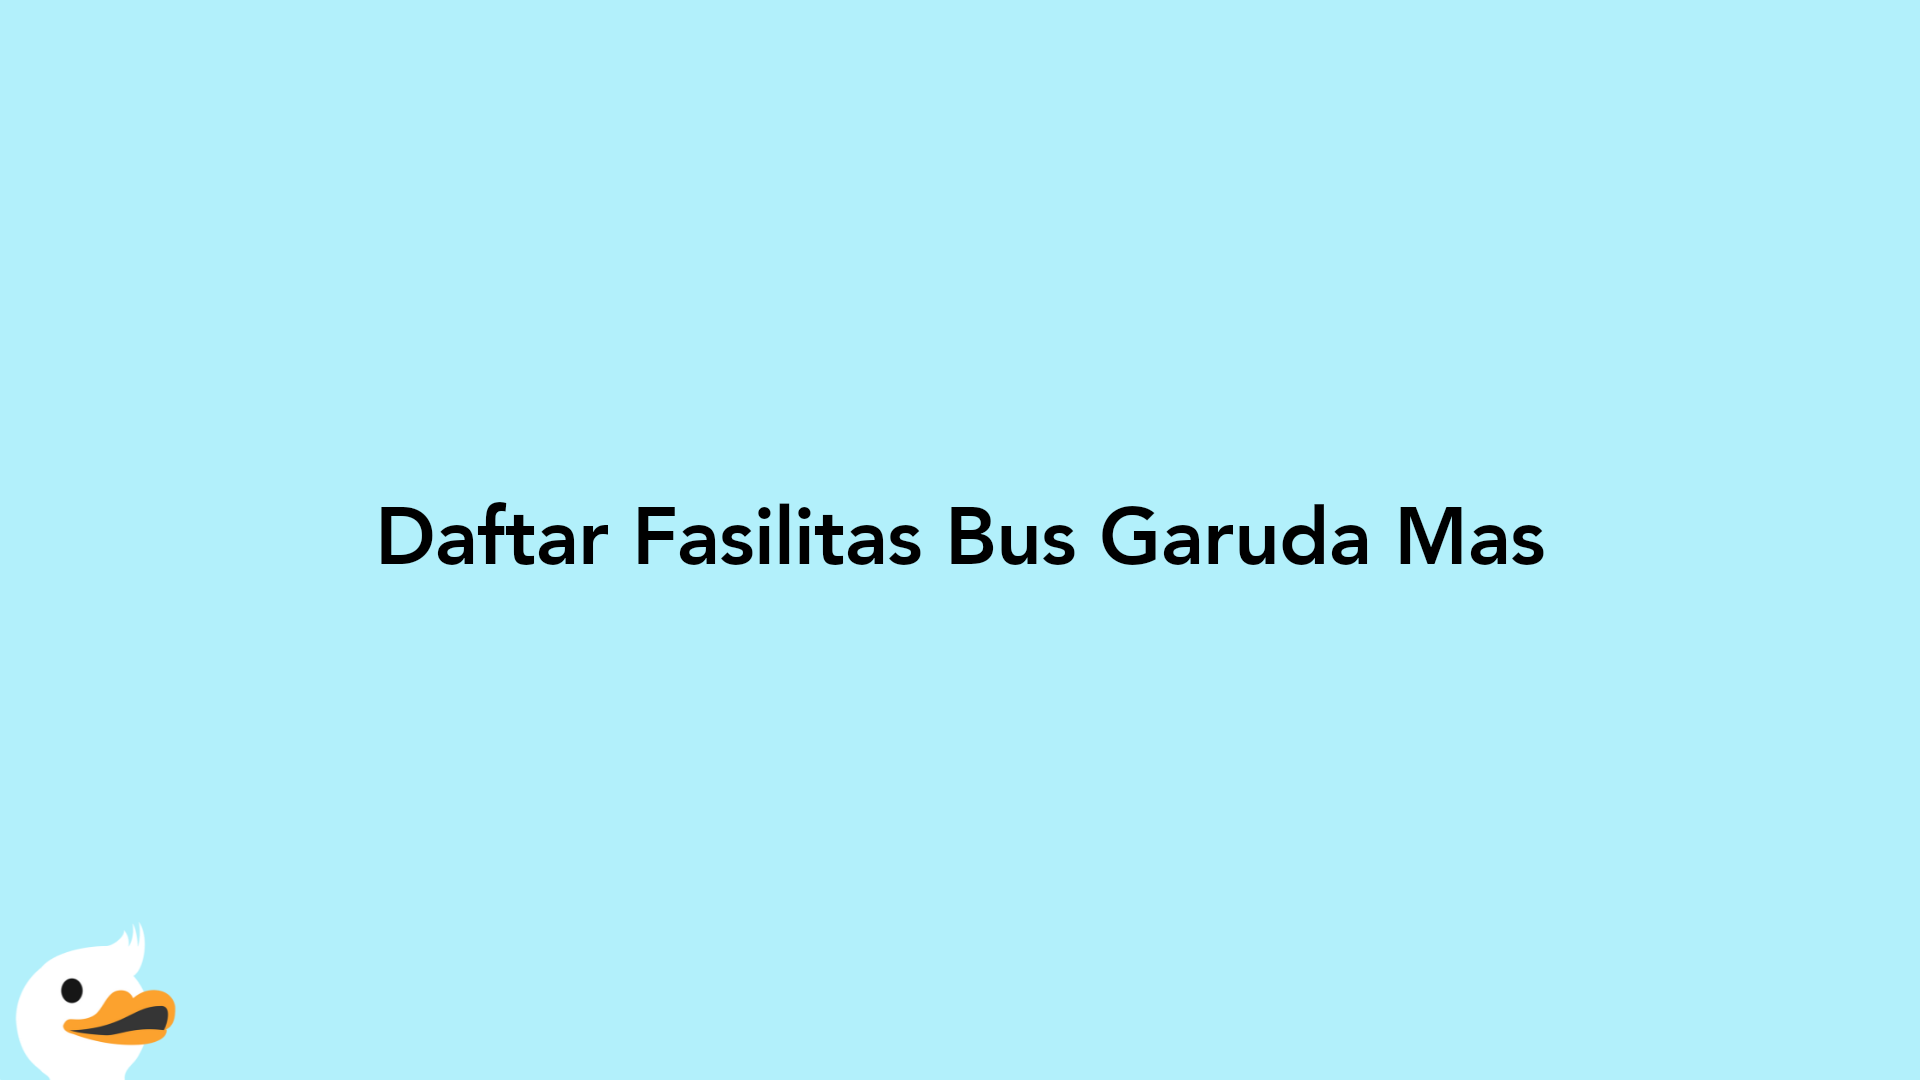 Daftar Fasilitas Bus Garuda Mas